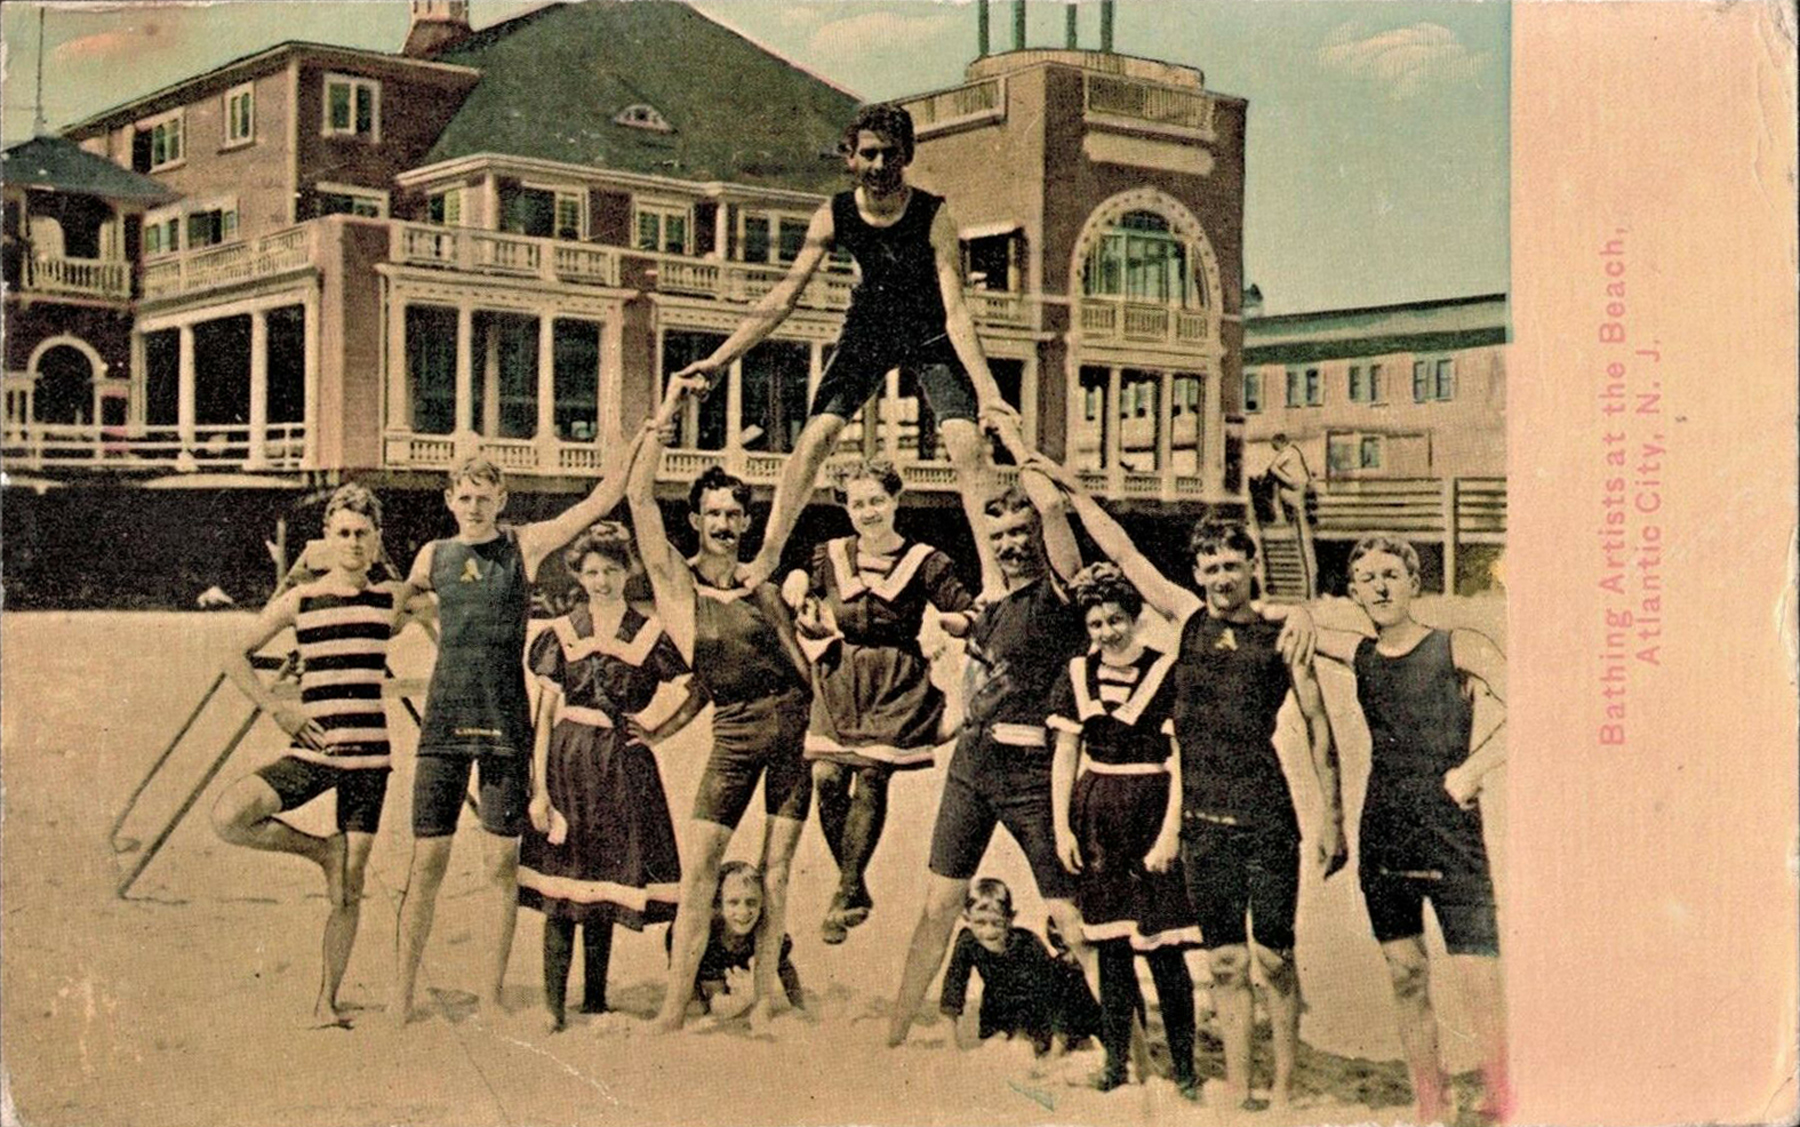 Atlantic City - Bathing Artists at the beach - 1912